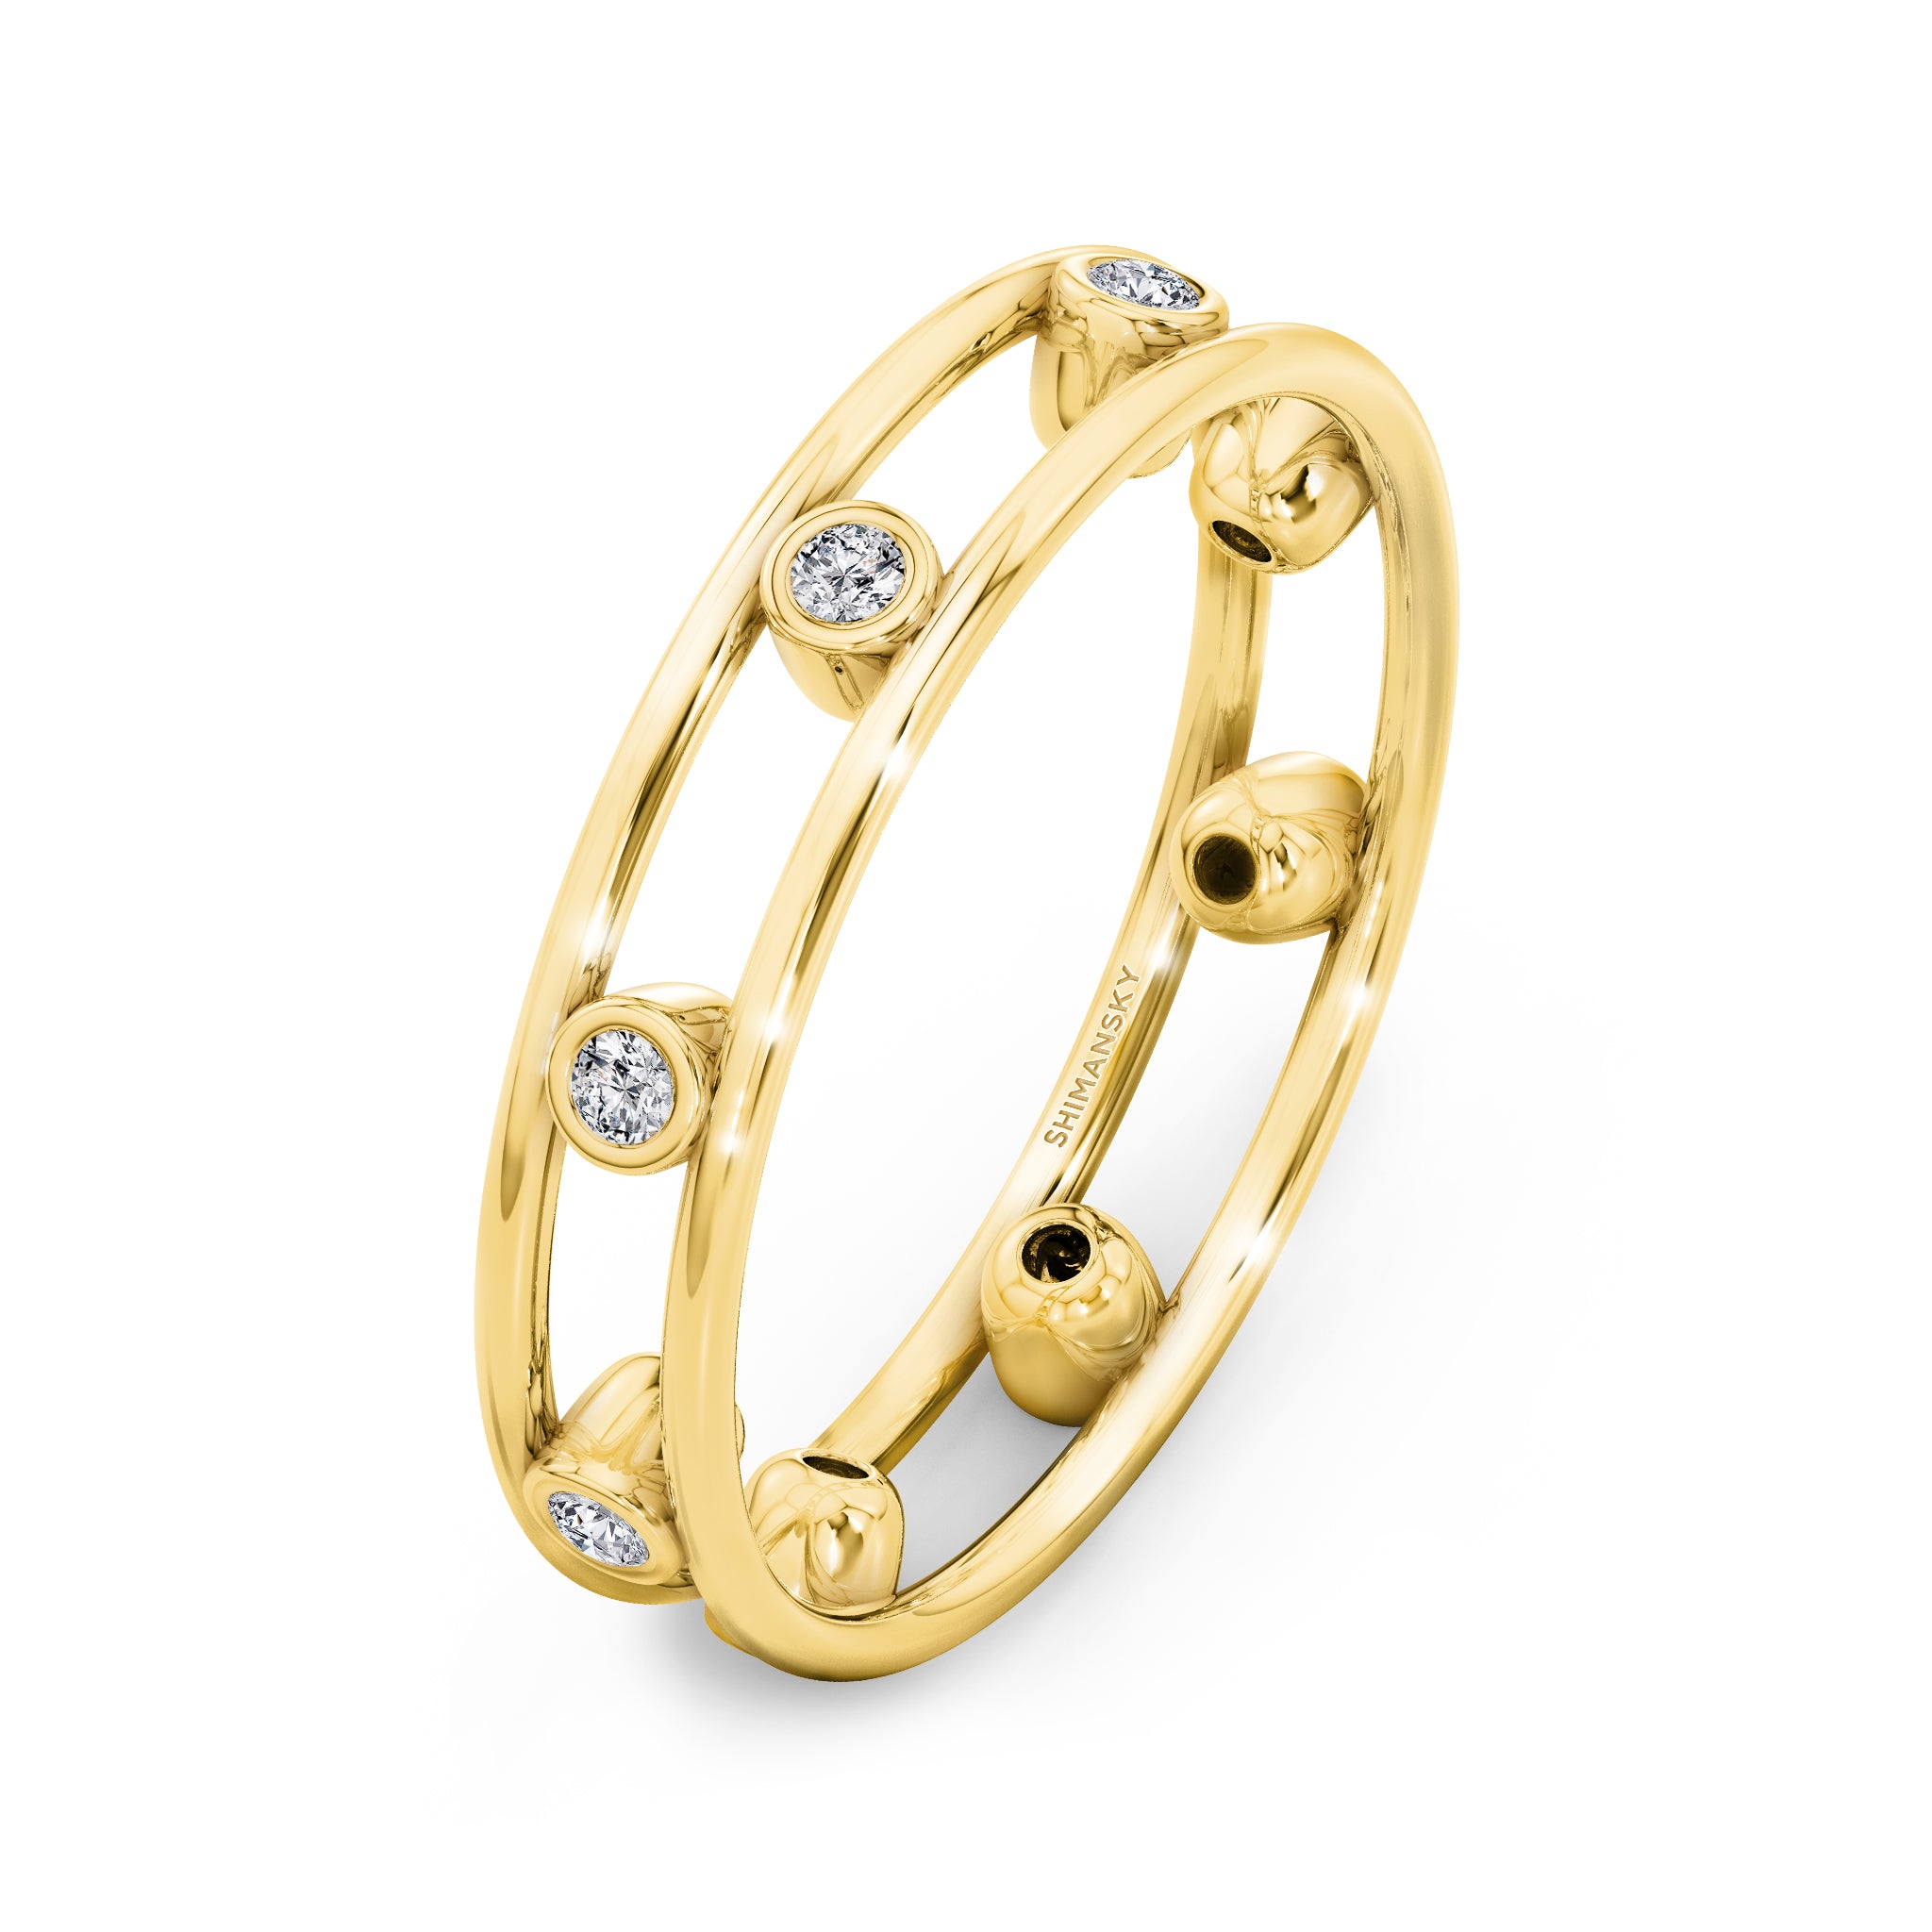 Caesar Light Diamond Ring 0.10ct crafted in 18K Yellow Gold - SHIMANSKY.CO.ZA